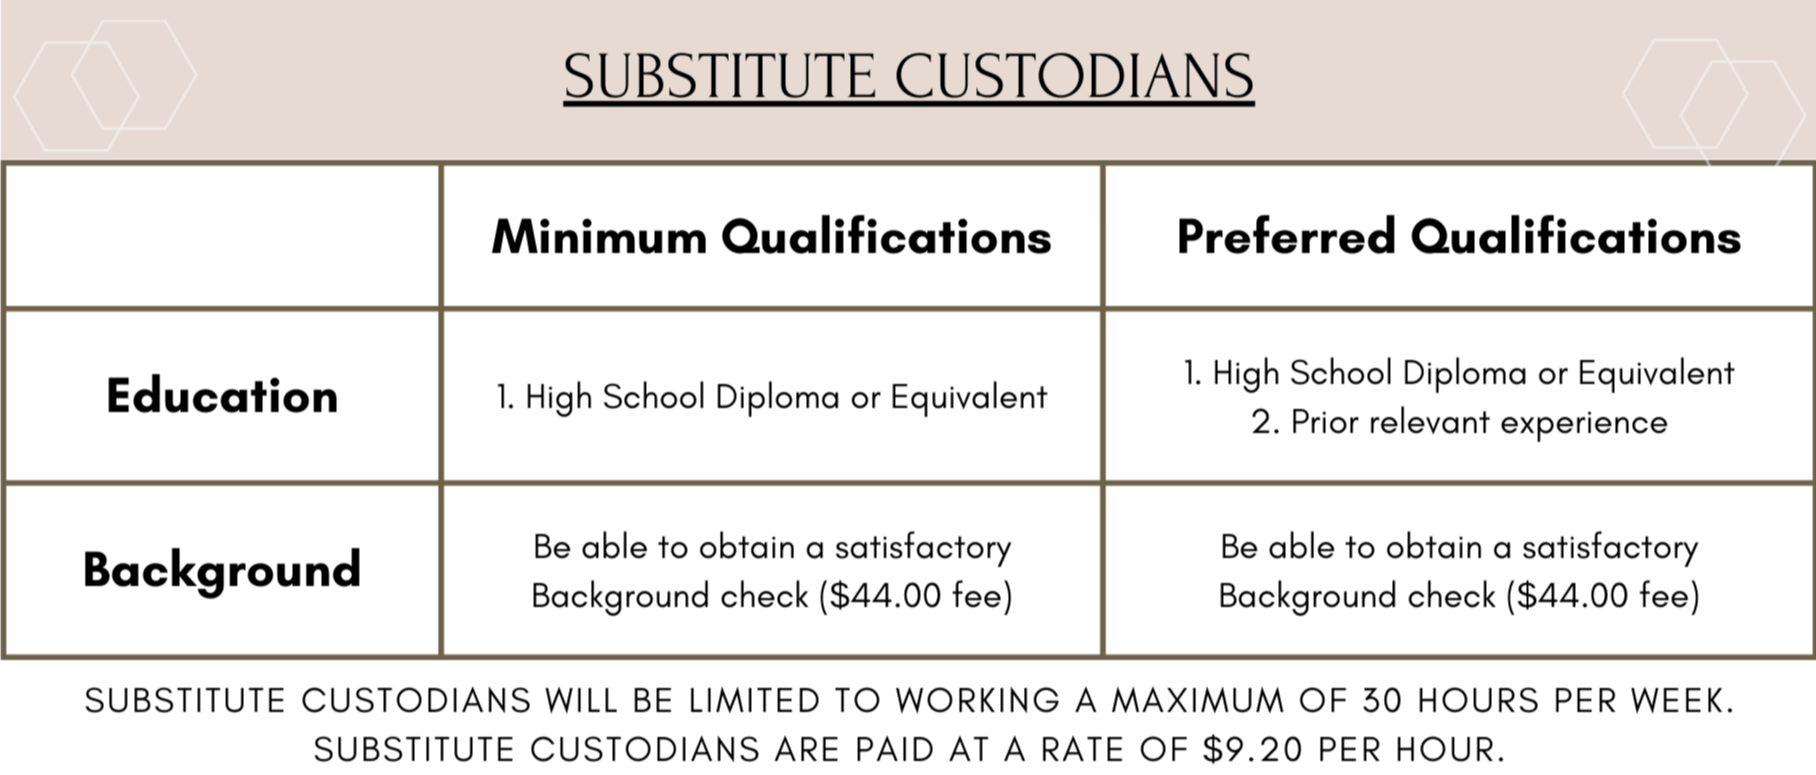 sub custodian qualifications